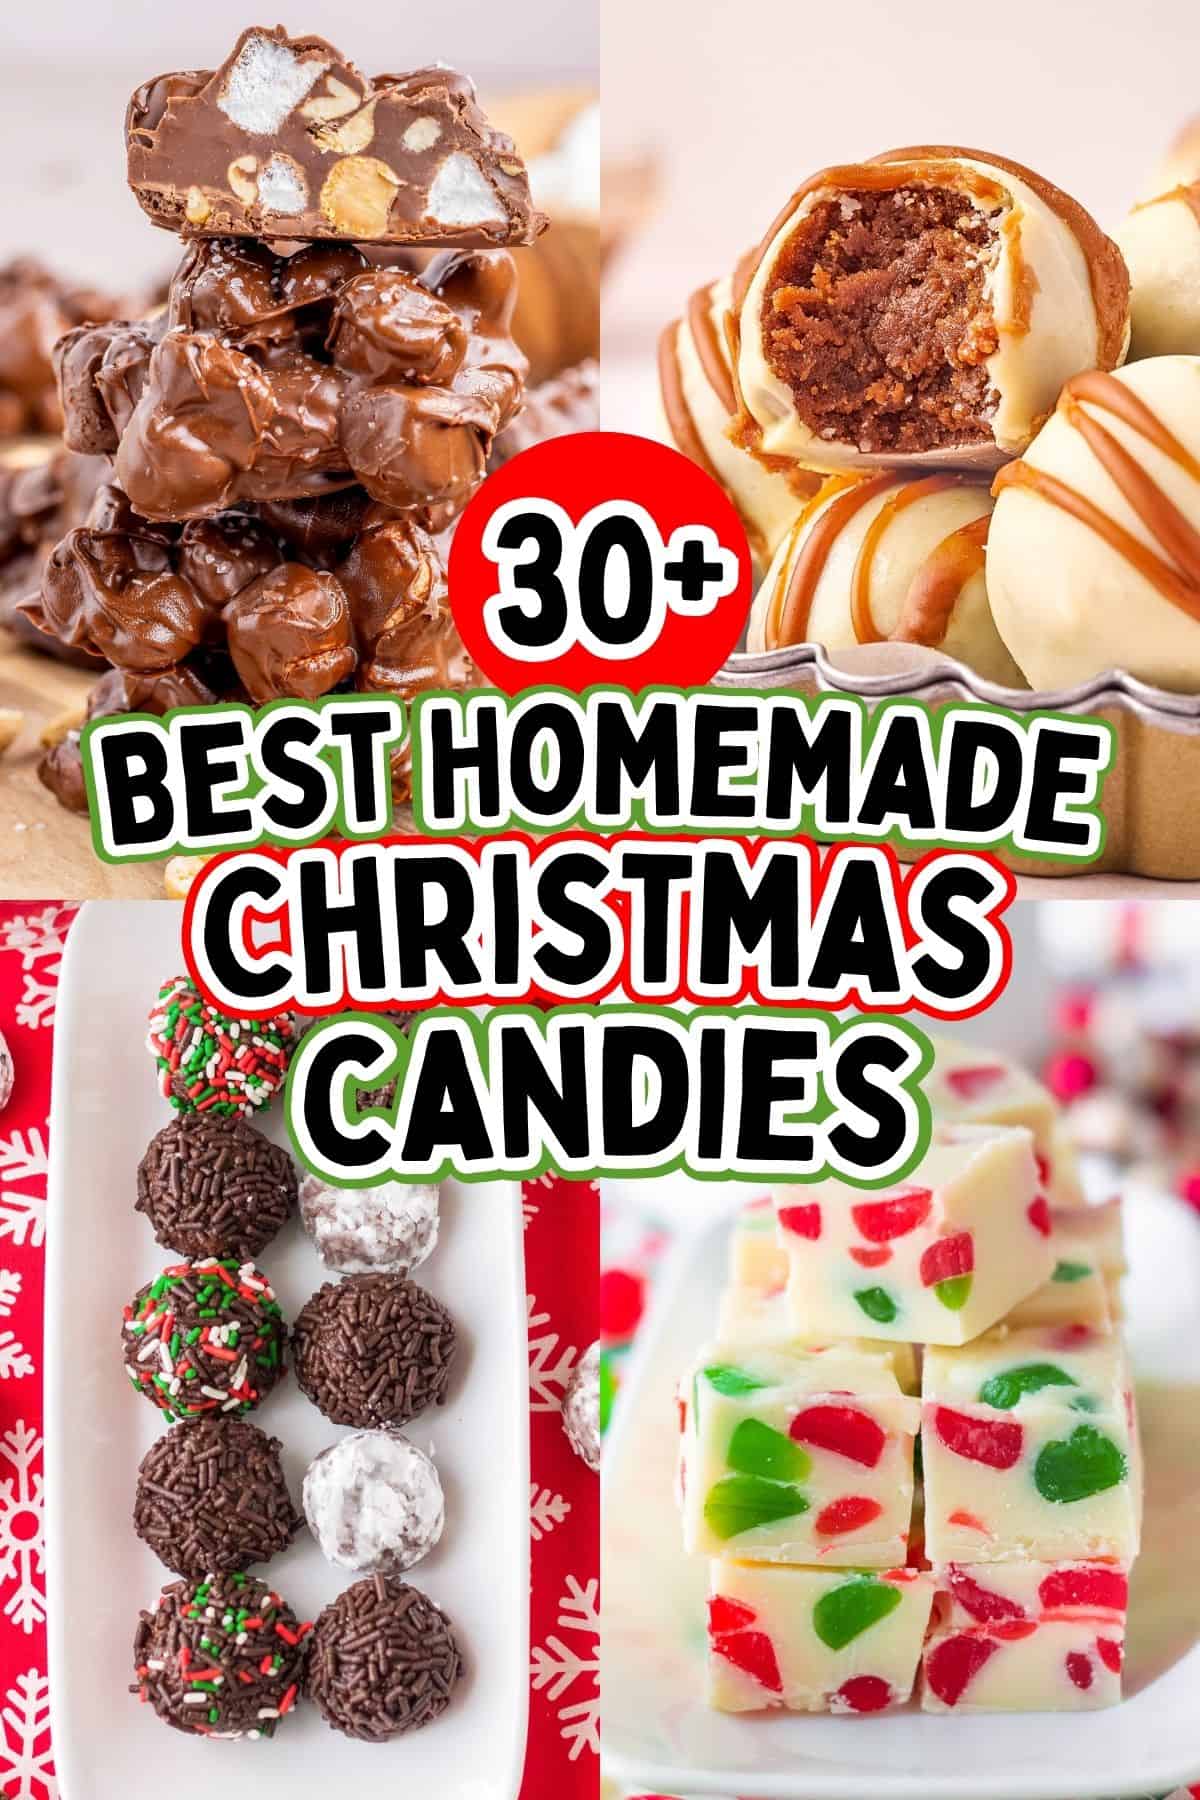 30+ Best Homemade Christmas Candies.